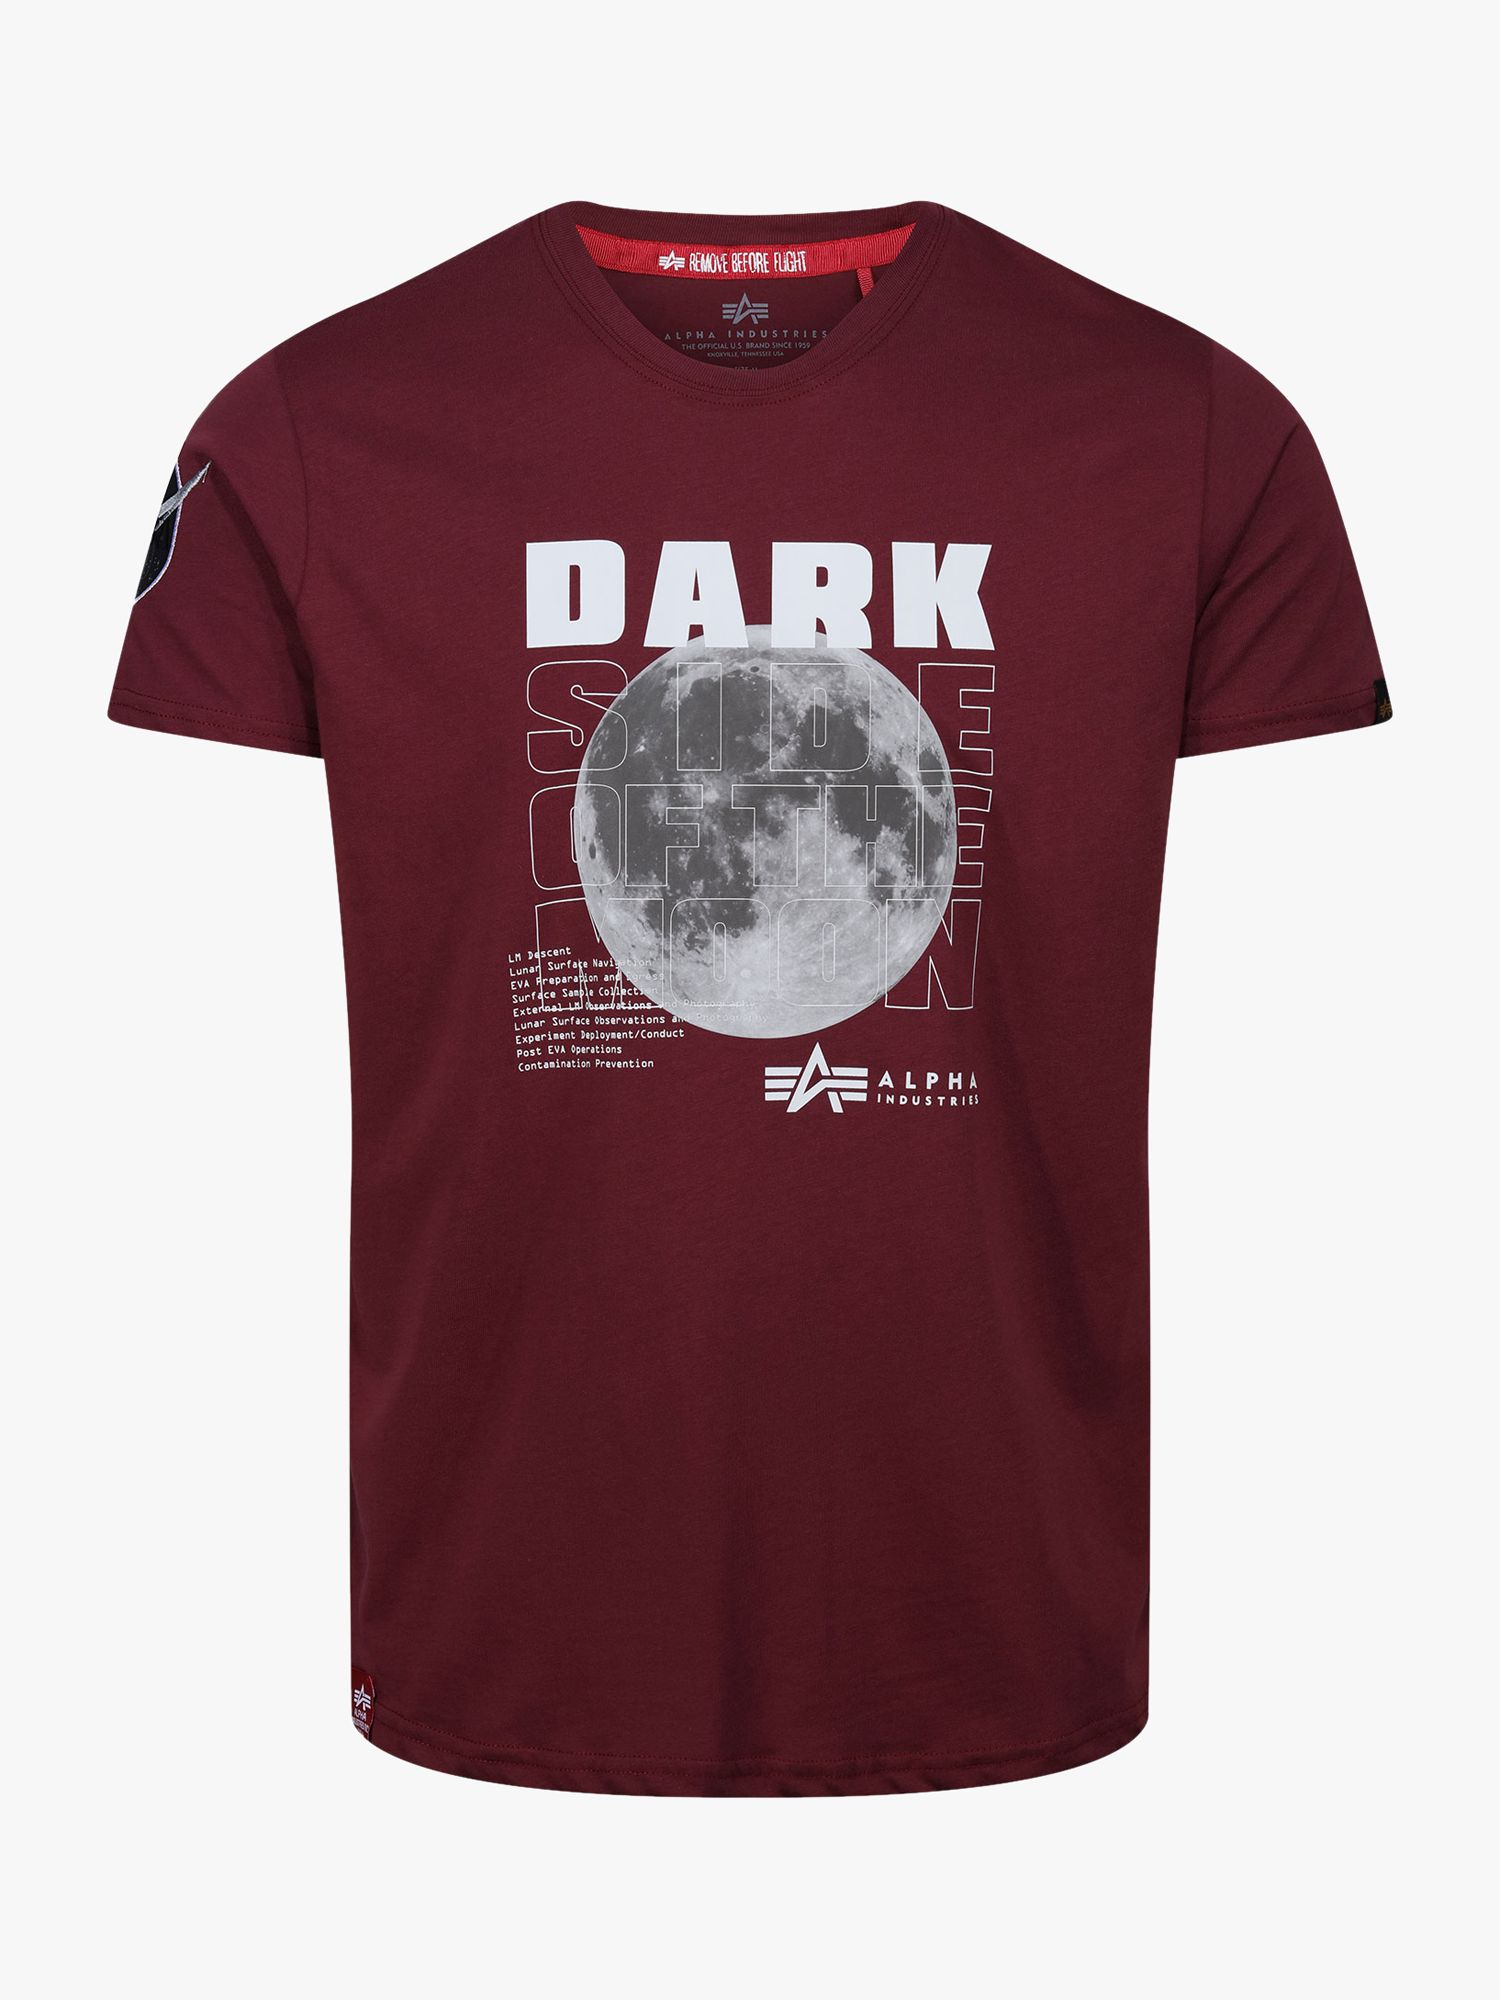 & Lewis Alpha Partners Crew Industries T-Shirt, Burgundy of Side NASA Moon John X 184 at the Dark